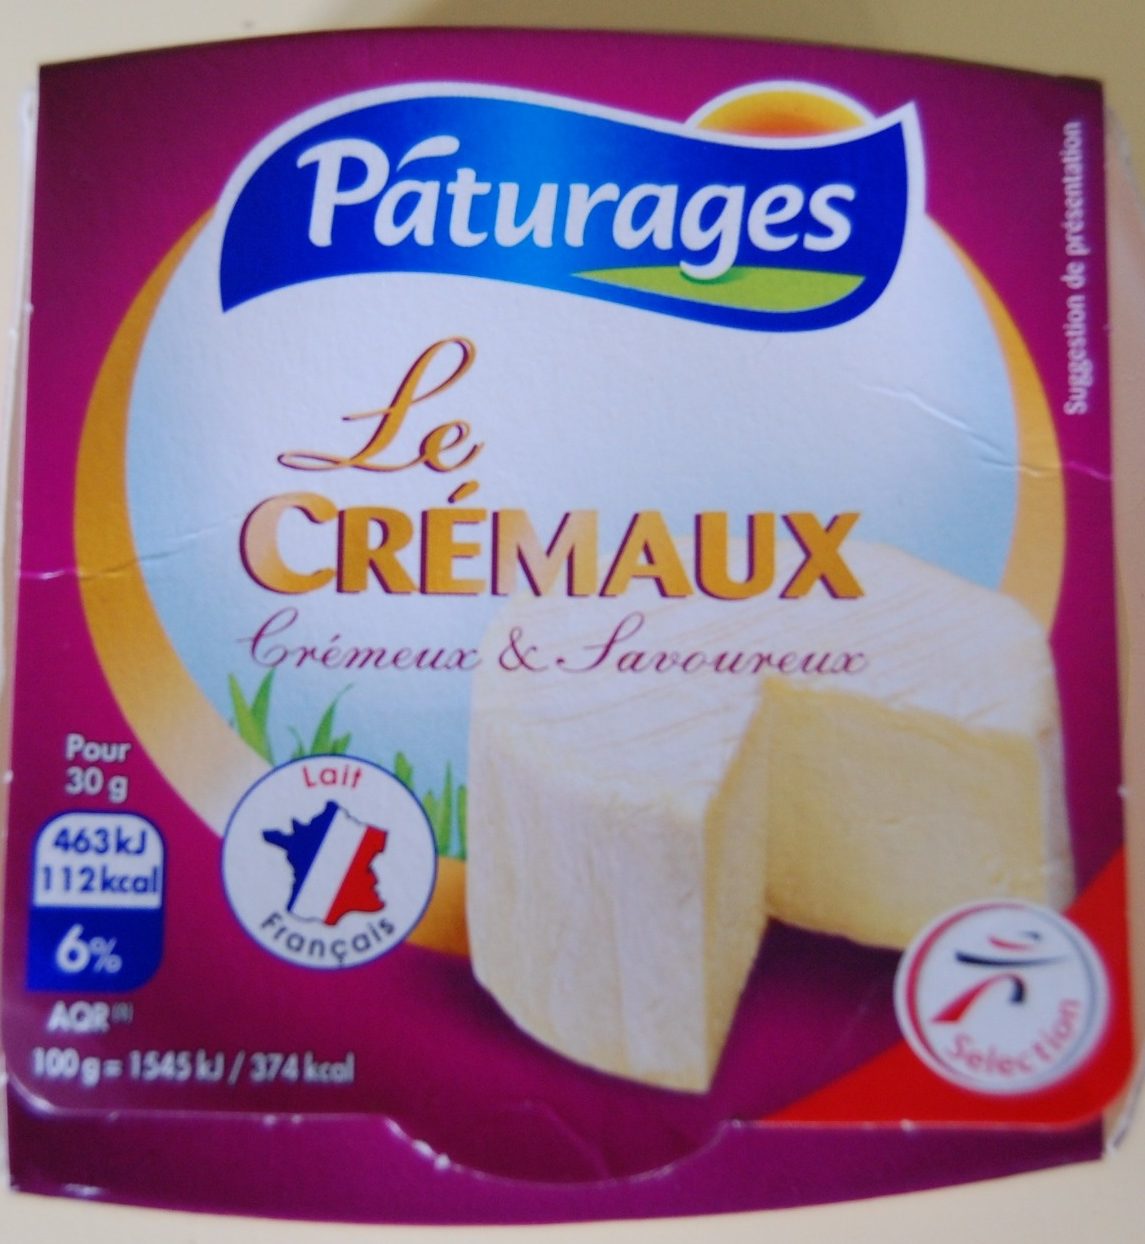 Cremaux - Ingredients - fr